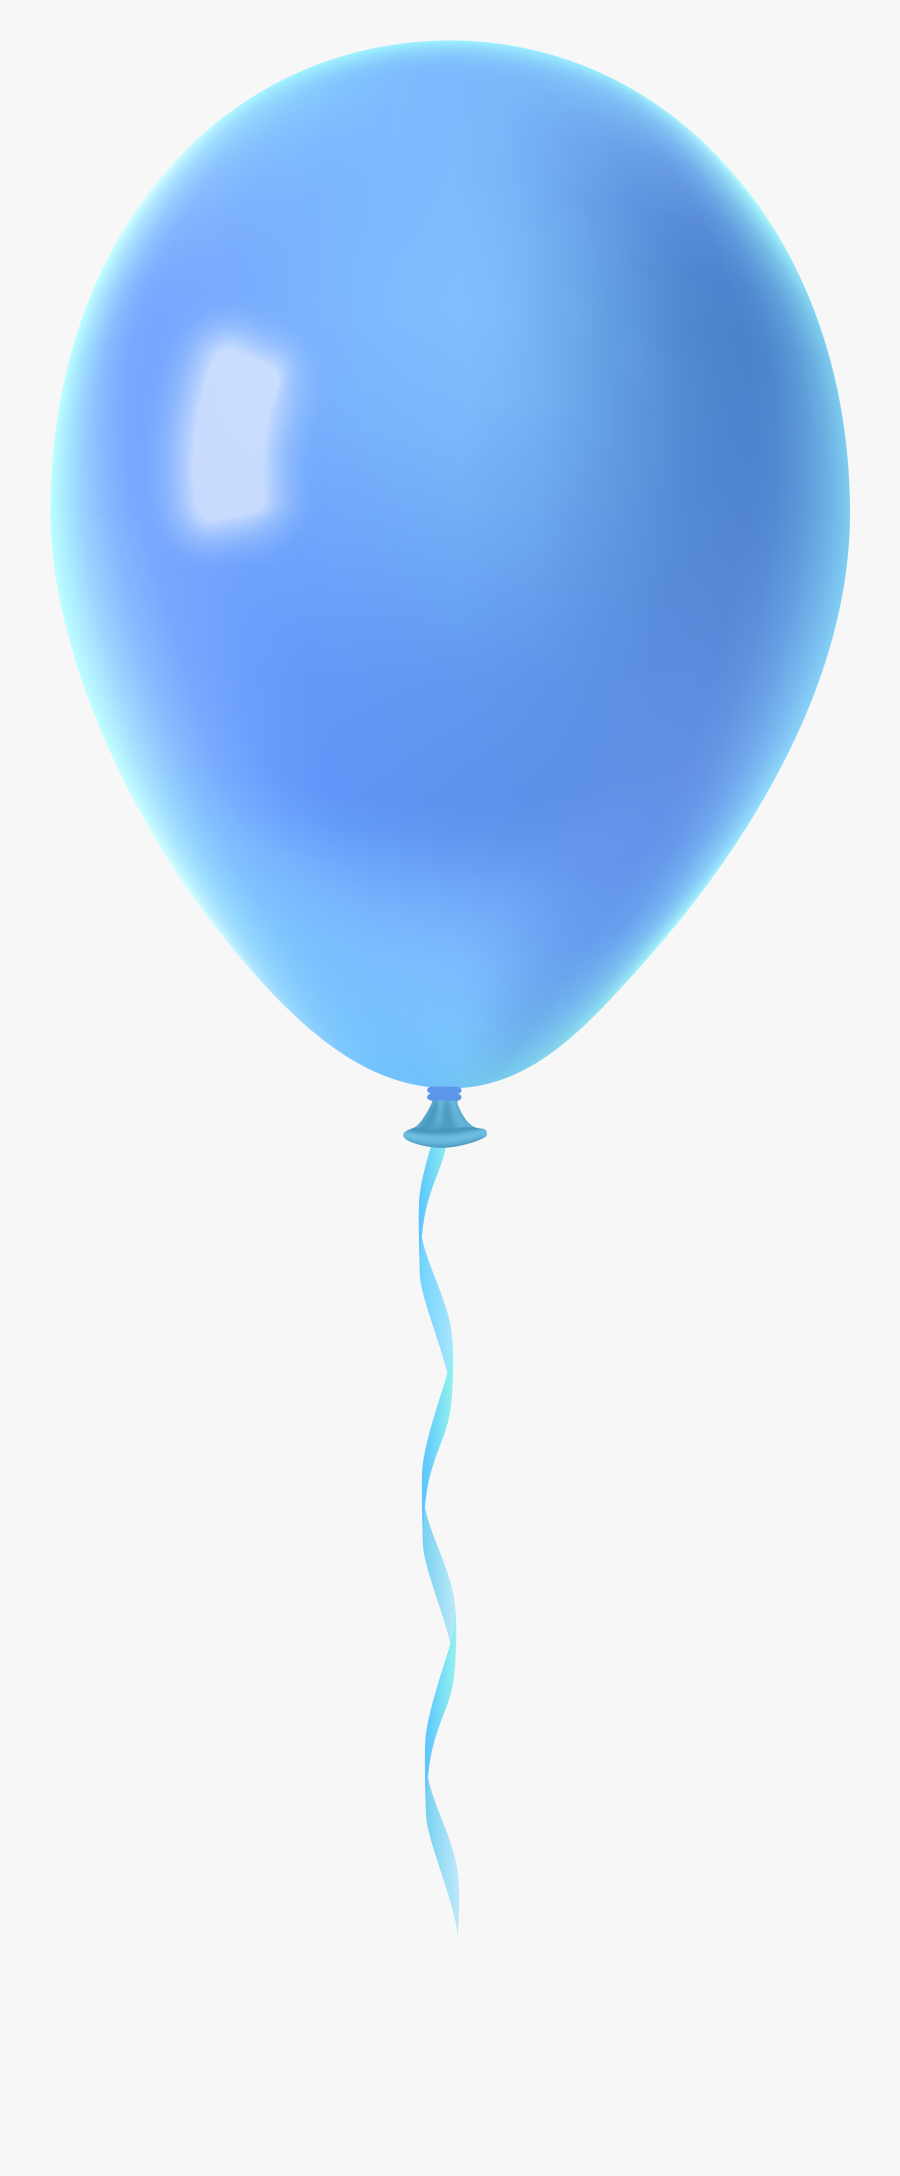 Blue Balloon Png - Blue Balloon Transparent Background, Transparent Clipart